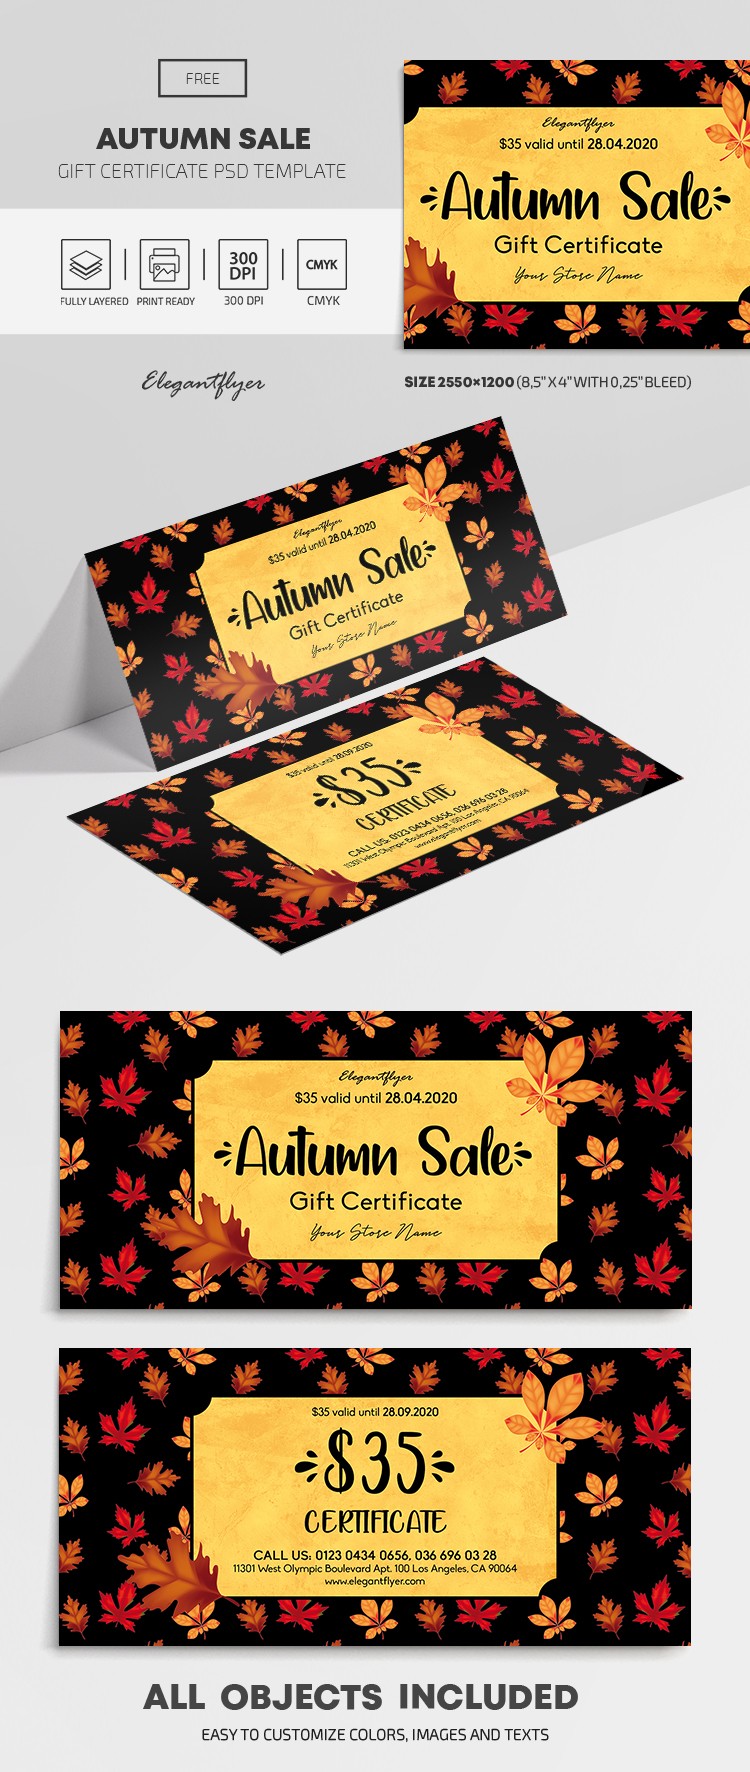 Autumn Sale Gift Certificate by ElegantFlyer